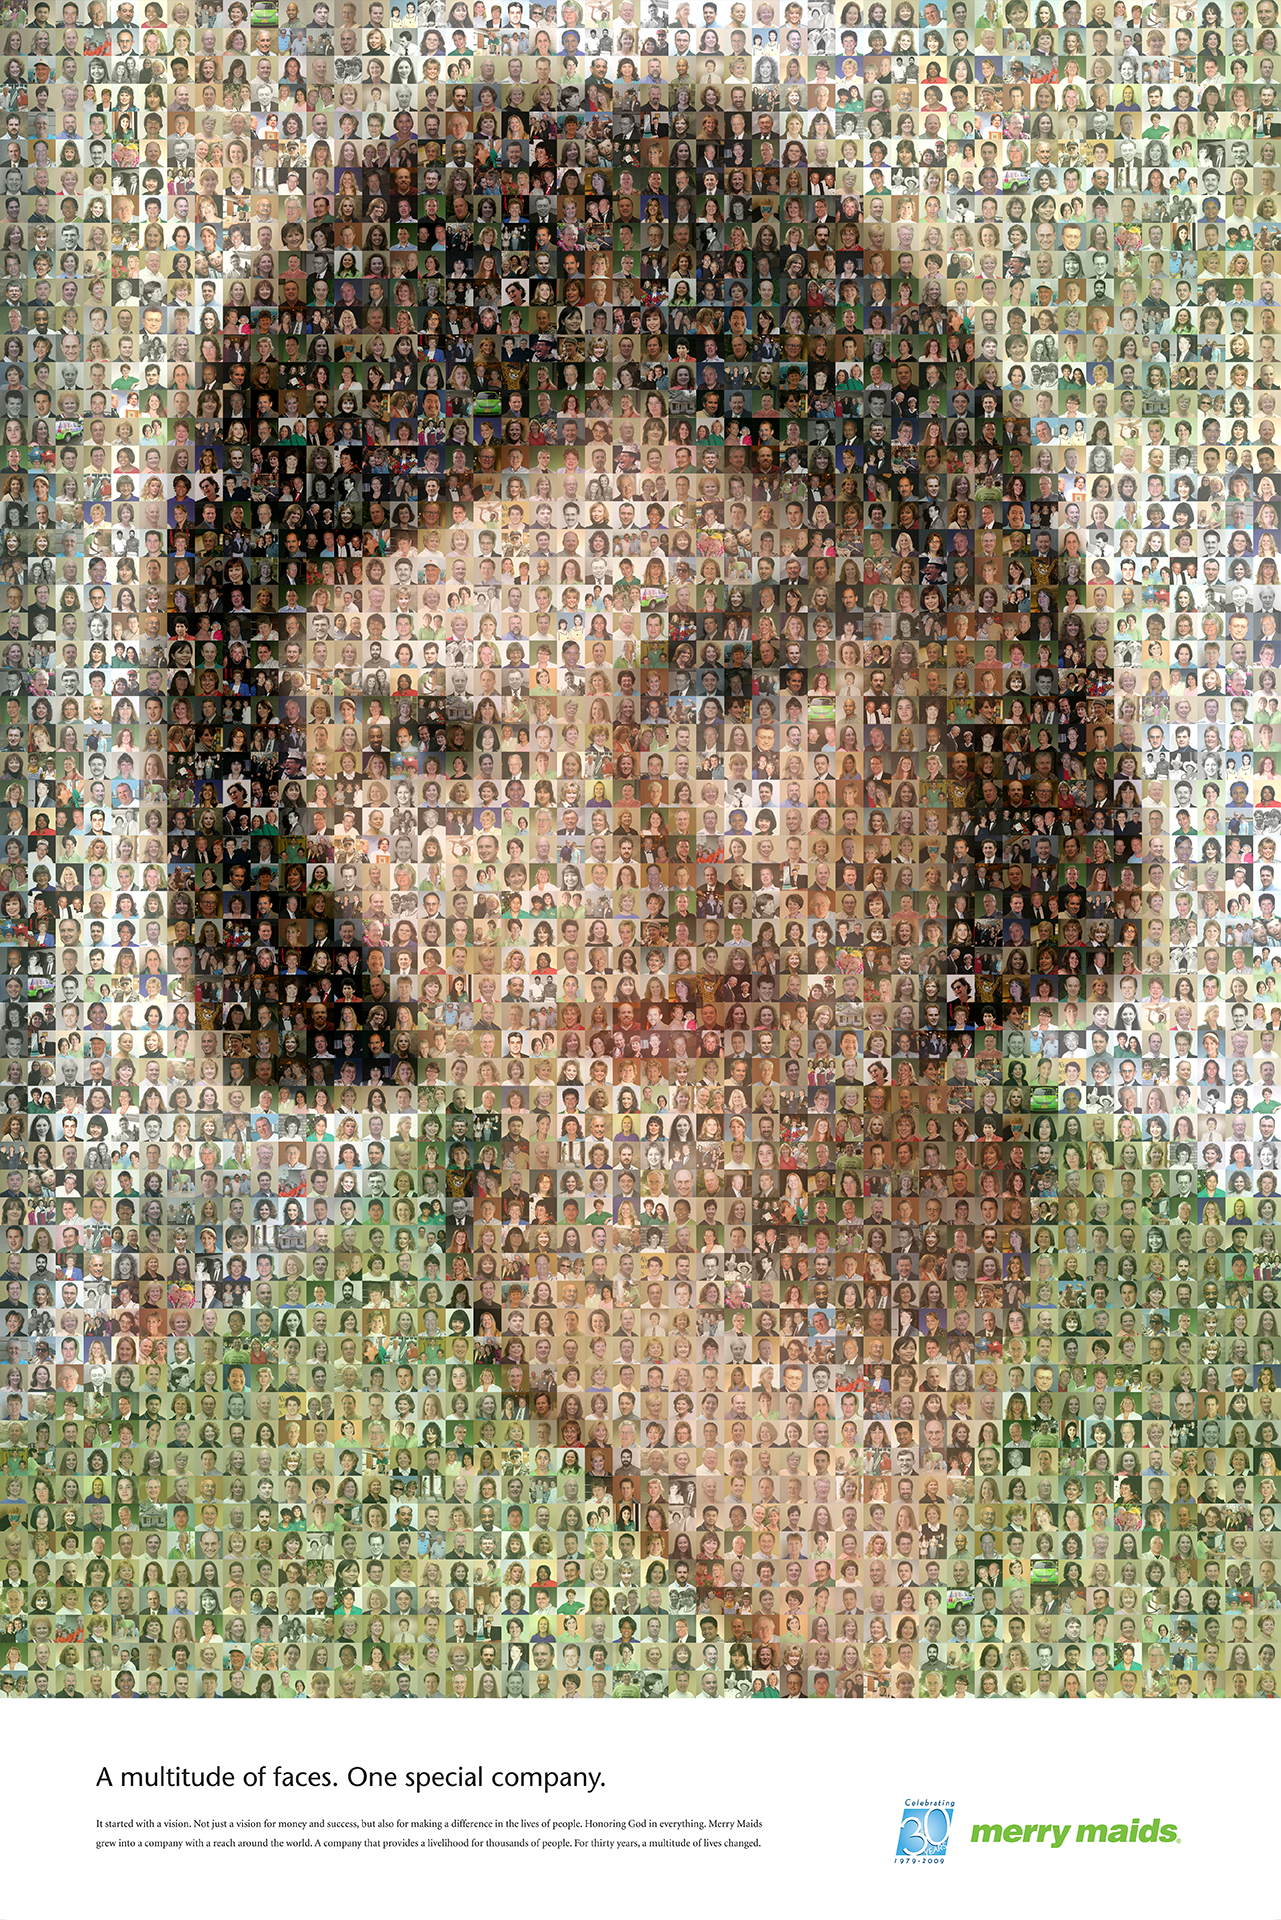 photo mosaic created using 477 employee photos